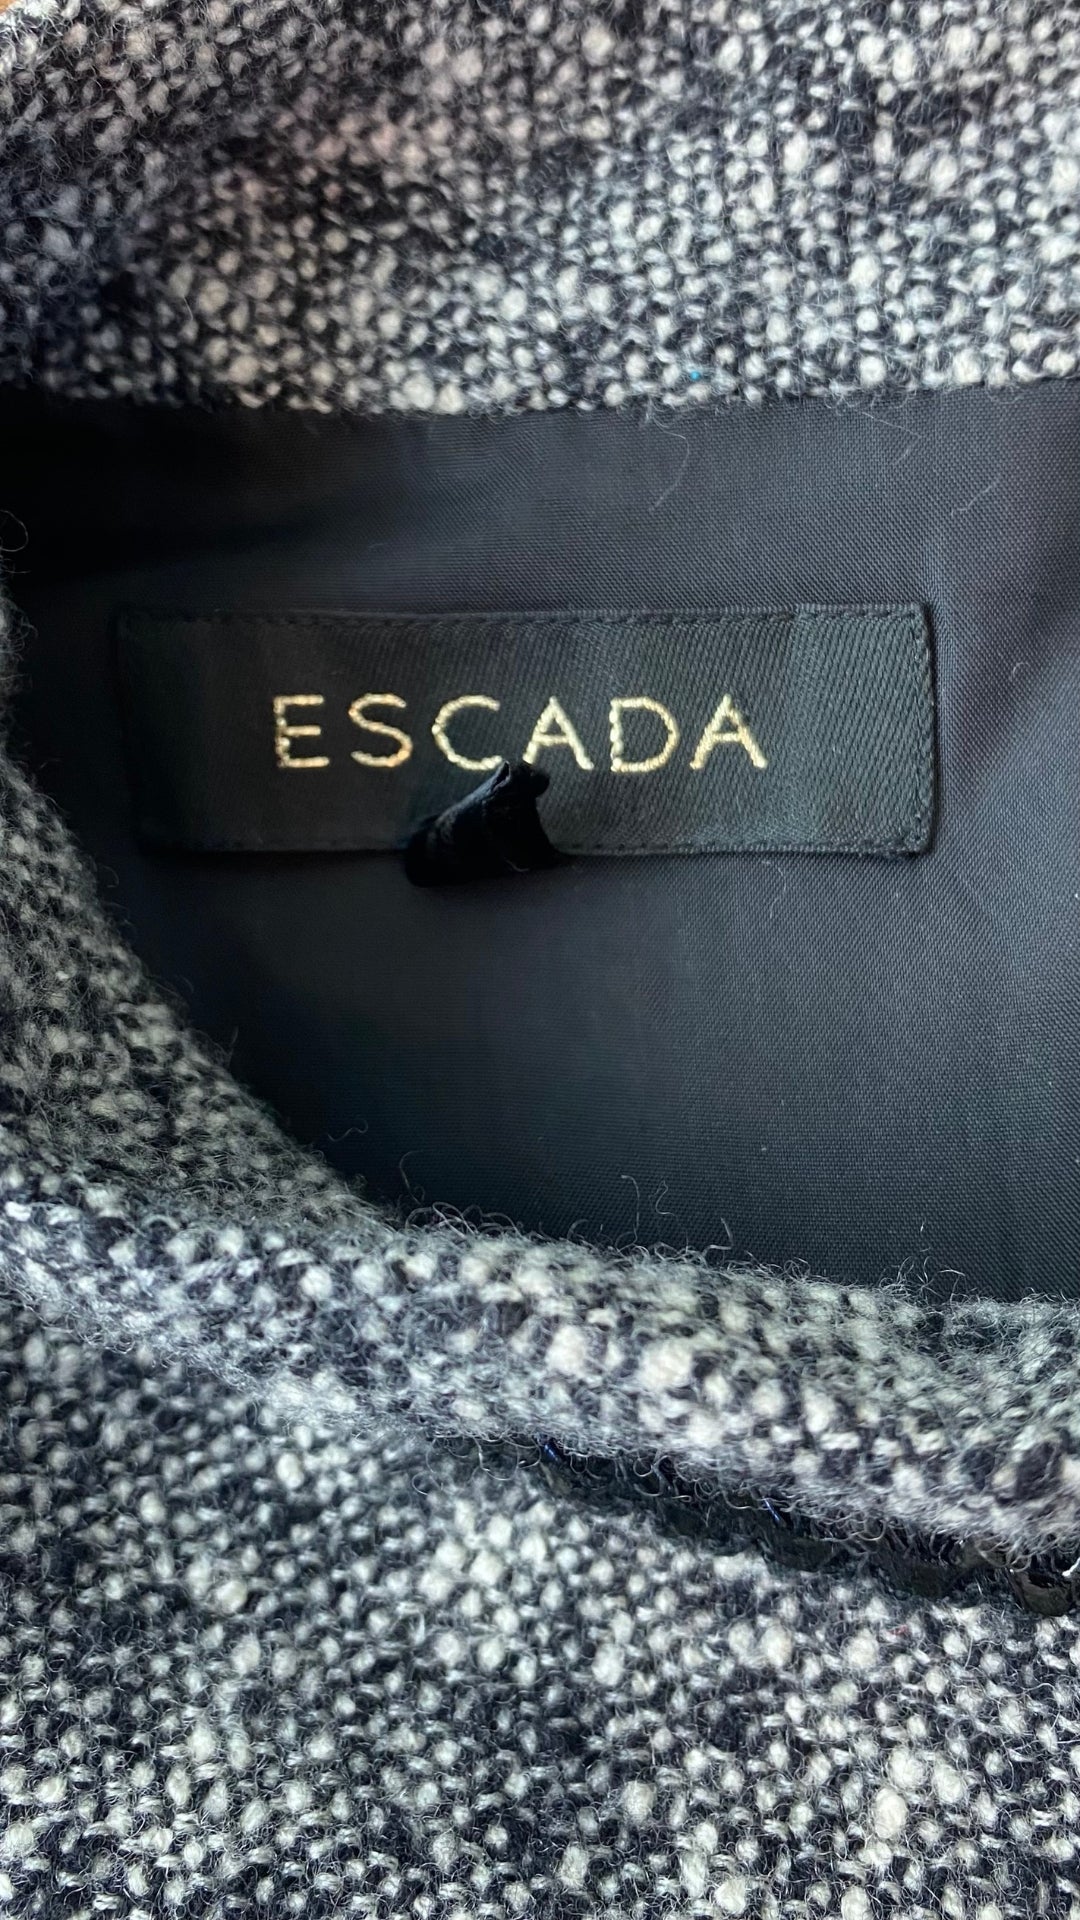 Robe luxueuse tweed Escada, taille 42 (env. large). Vue de l'étiquette de marque.